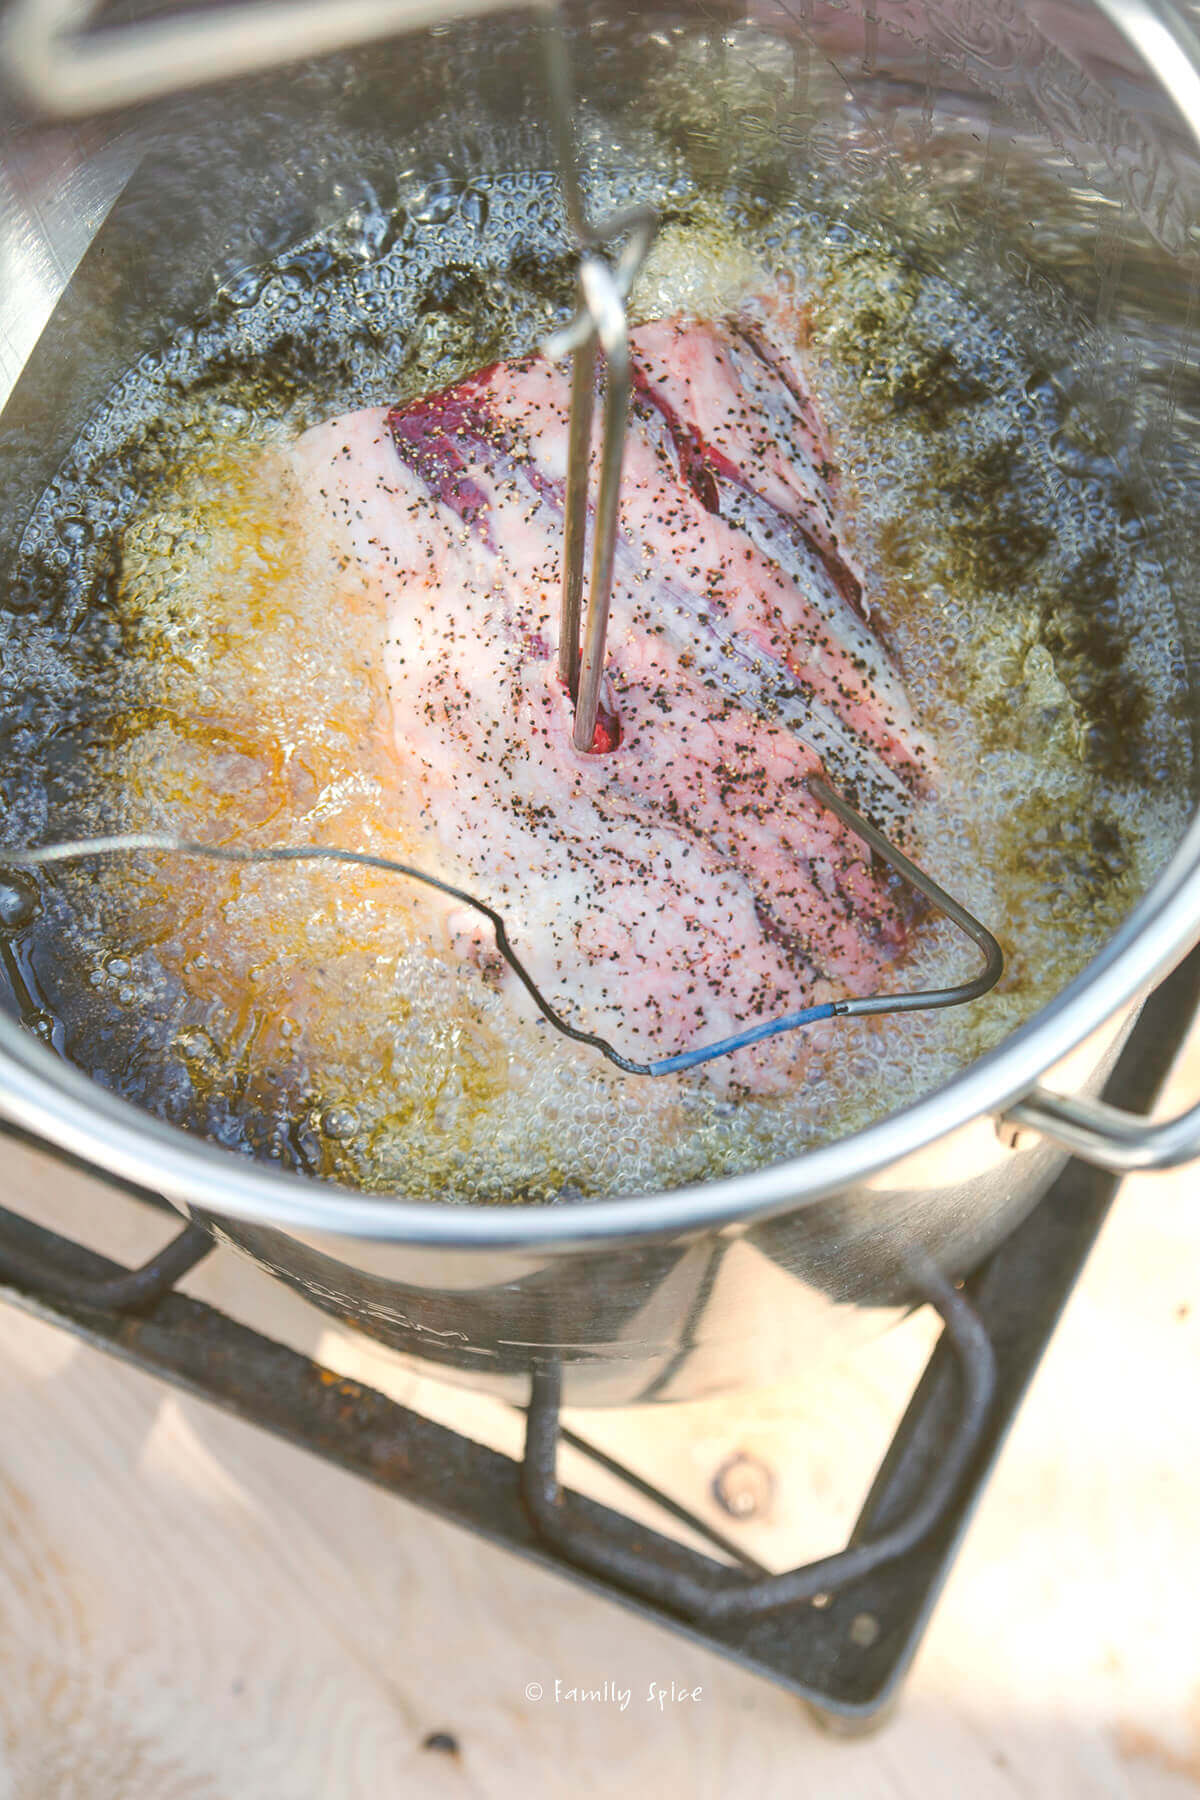 Lowering a rib roast into a deep fryer